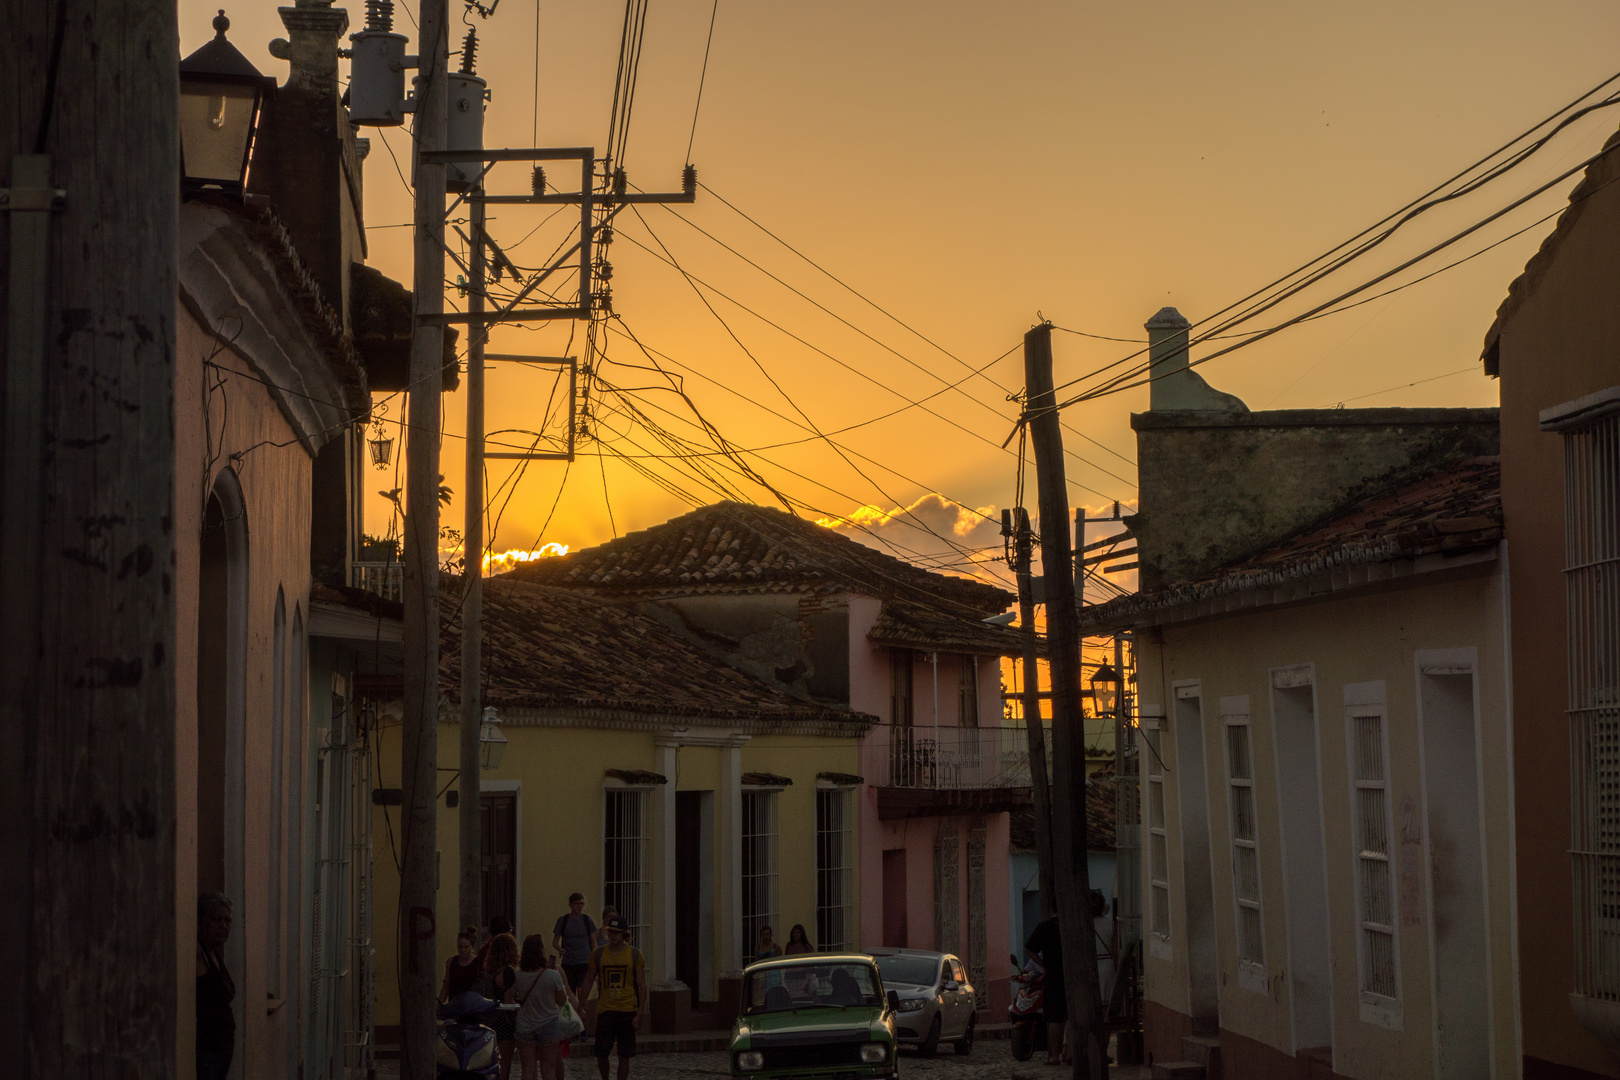 Sonnenuntergang hinter Trinidad, Kuba